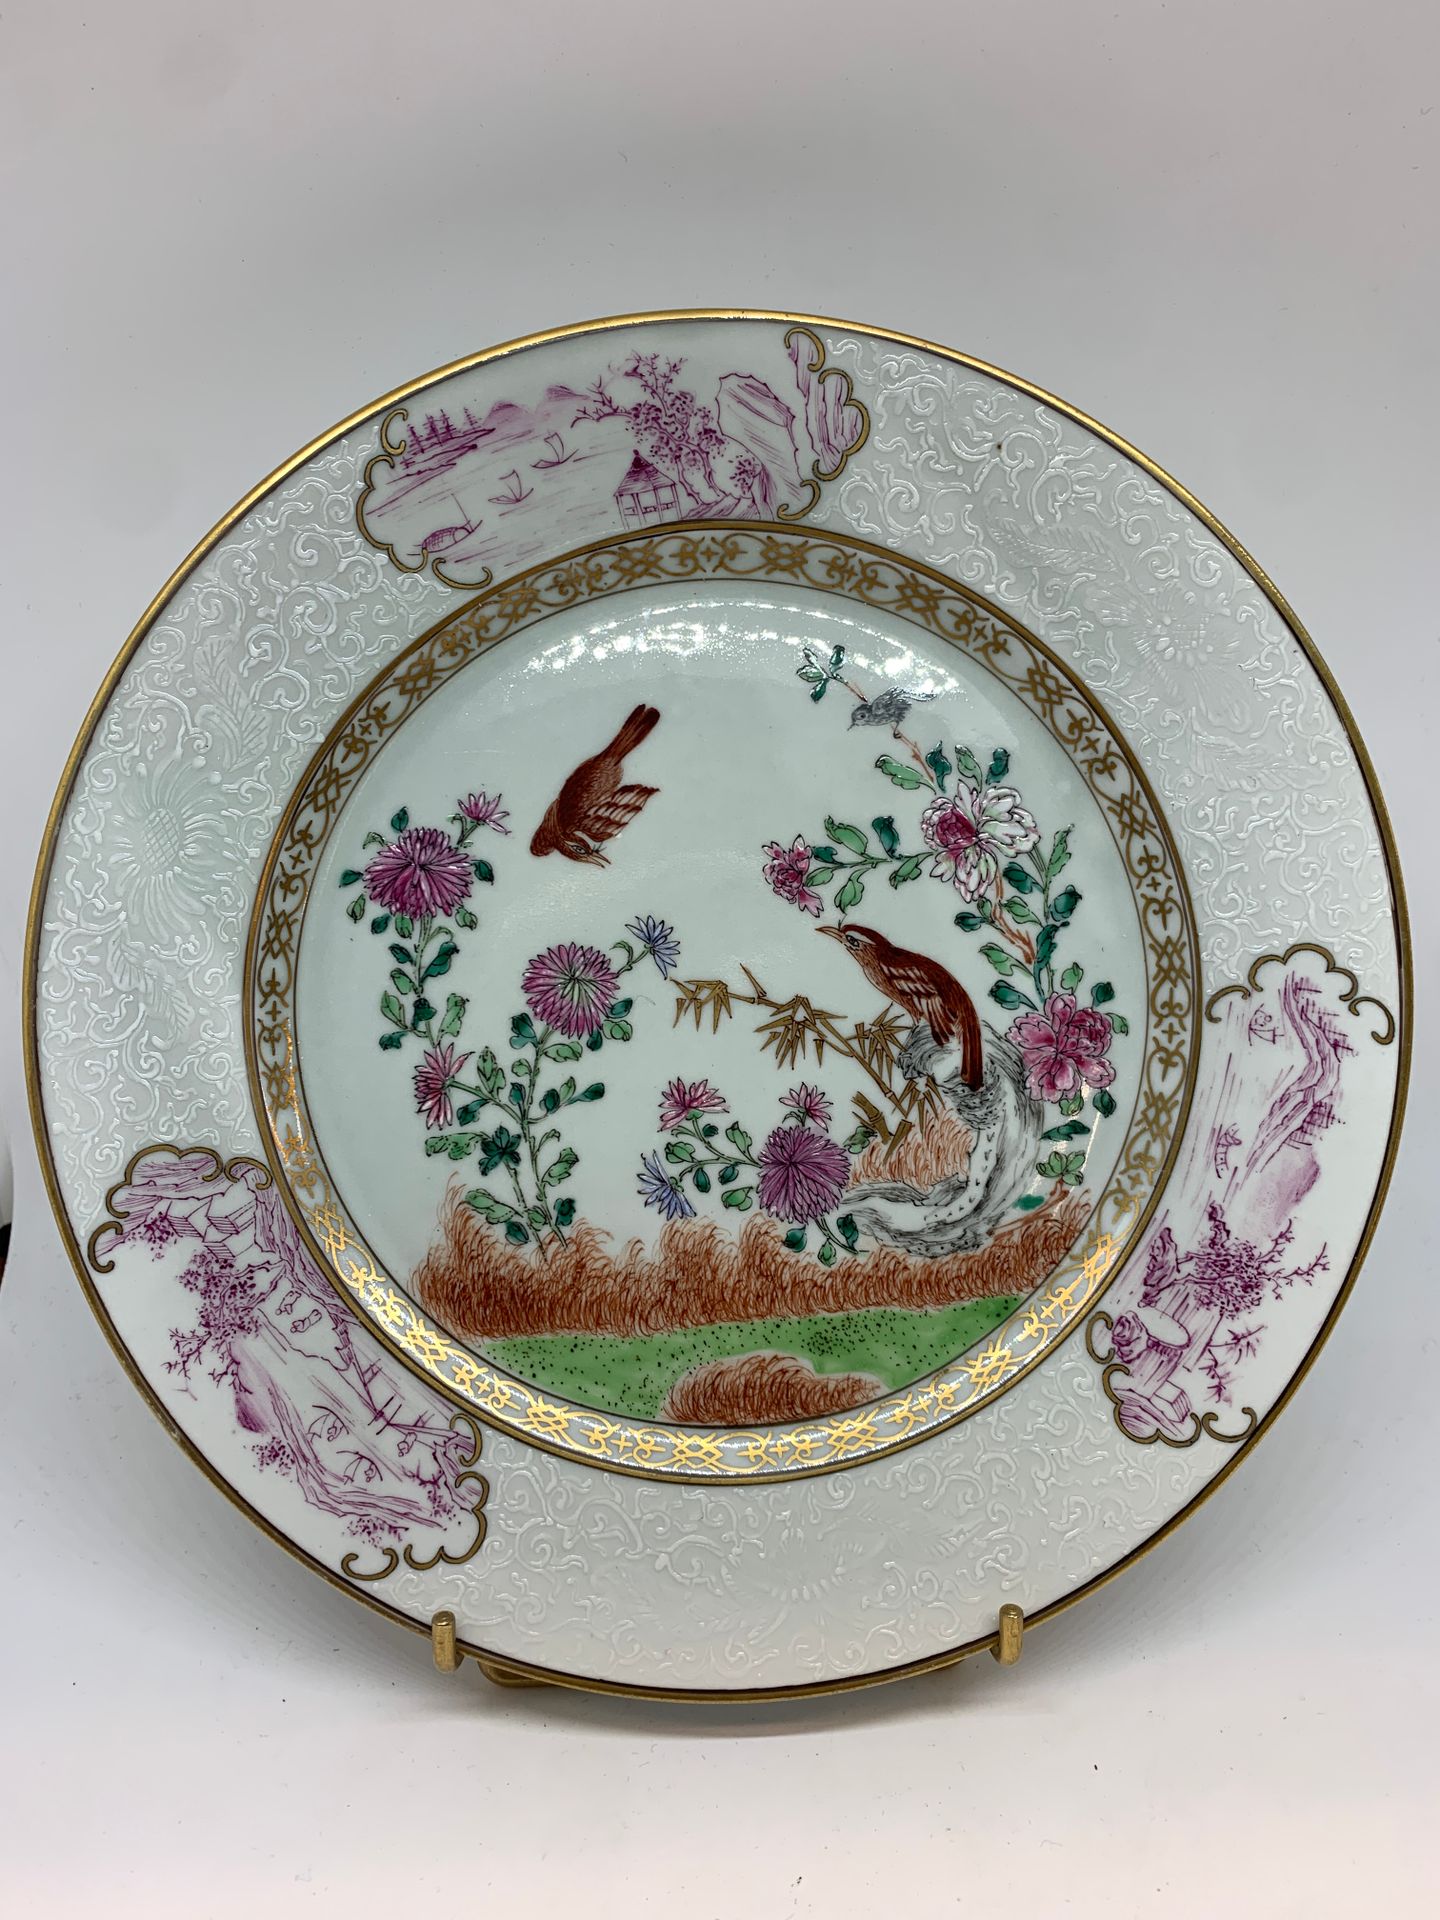 Null 中国
瓷盘，浅白色浮雕花鸟的多色装饰。
尺寸：24厘米。